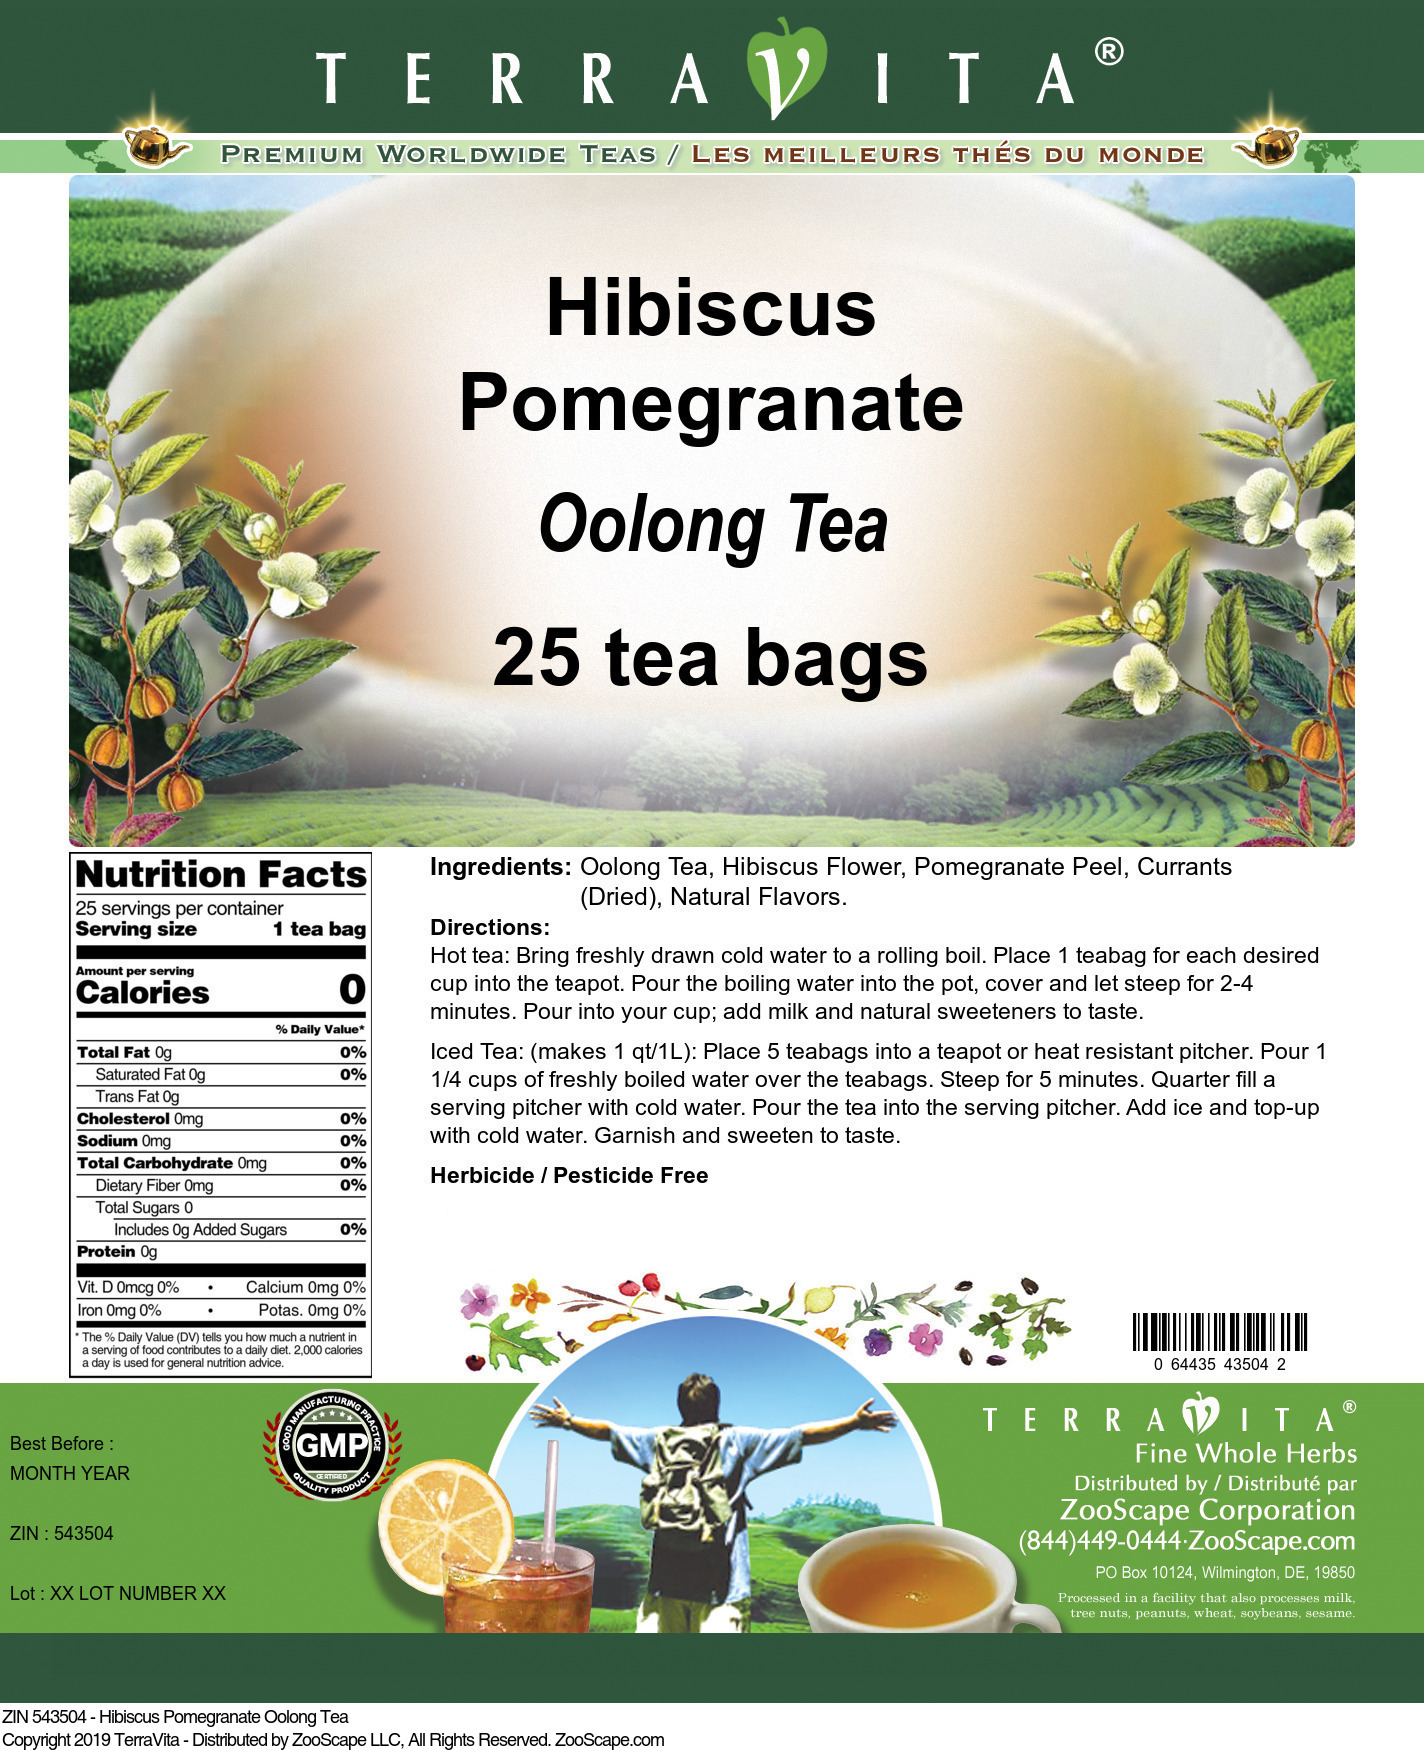 Hibiscus Pomegranate Oolong Tea - Label